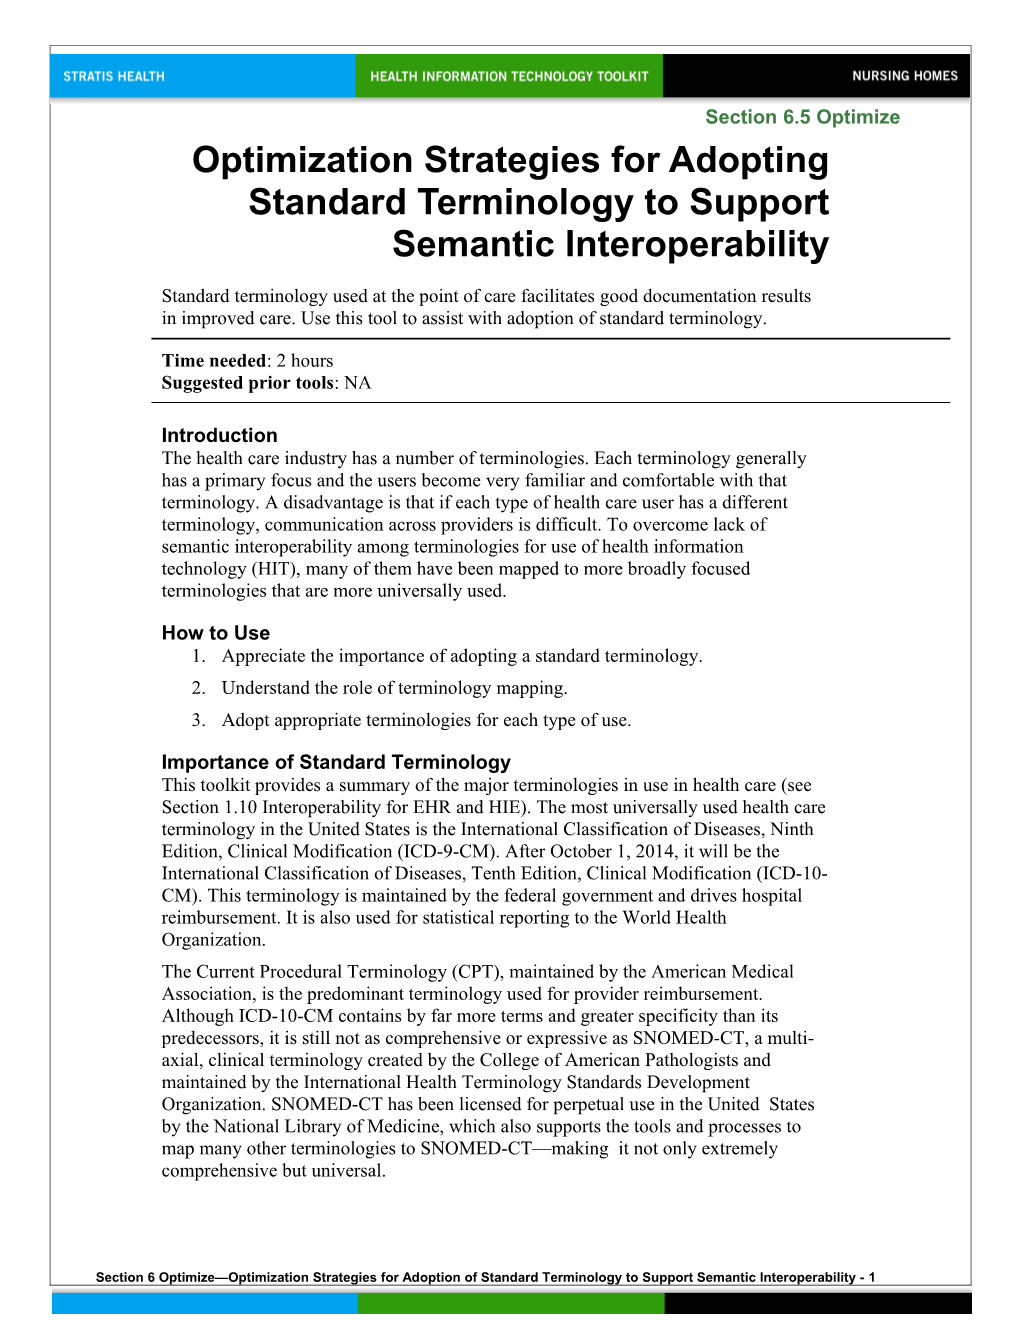 6 Optimization Strategies for Adopting Standard Terminology to Support Semantic Interoperability